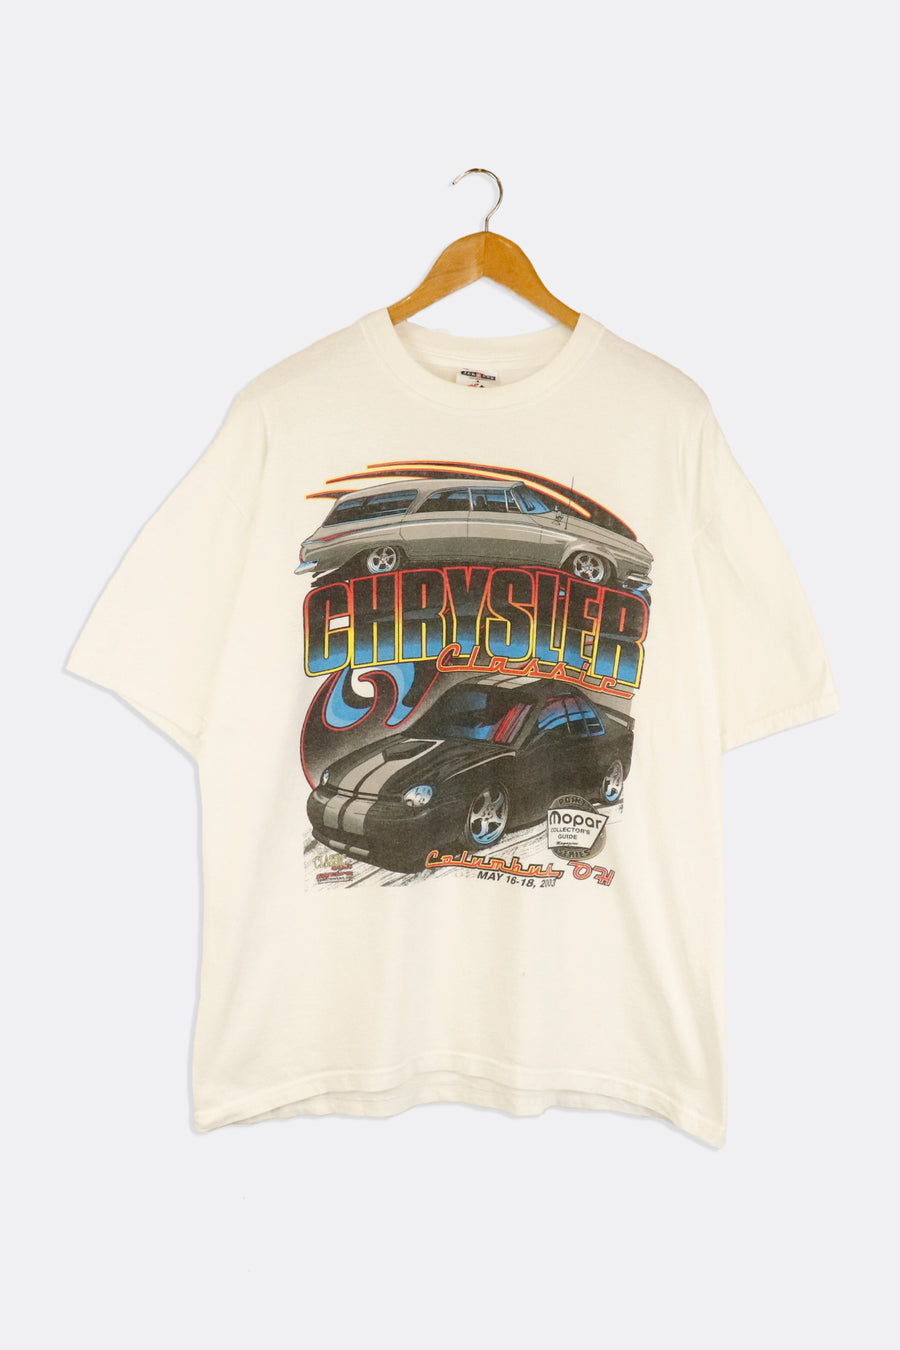 Vintage 2003 Chrysler Classic Columbus Ohio Sponsorship Graphic T Shirt Sz XL